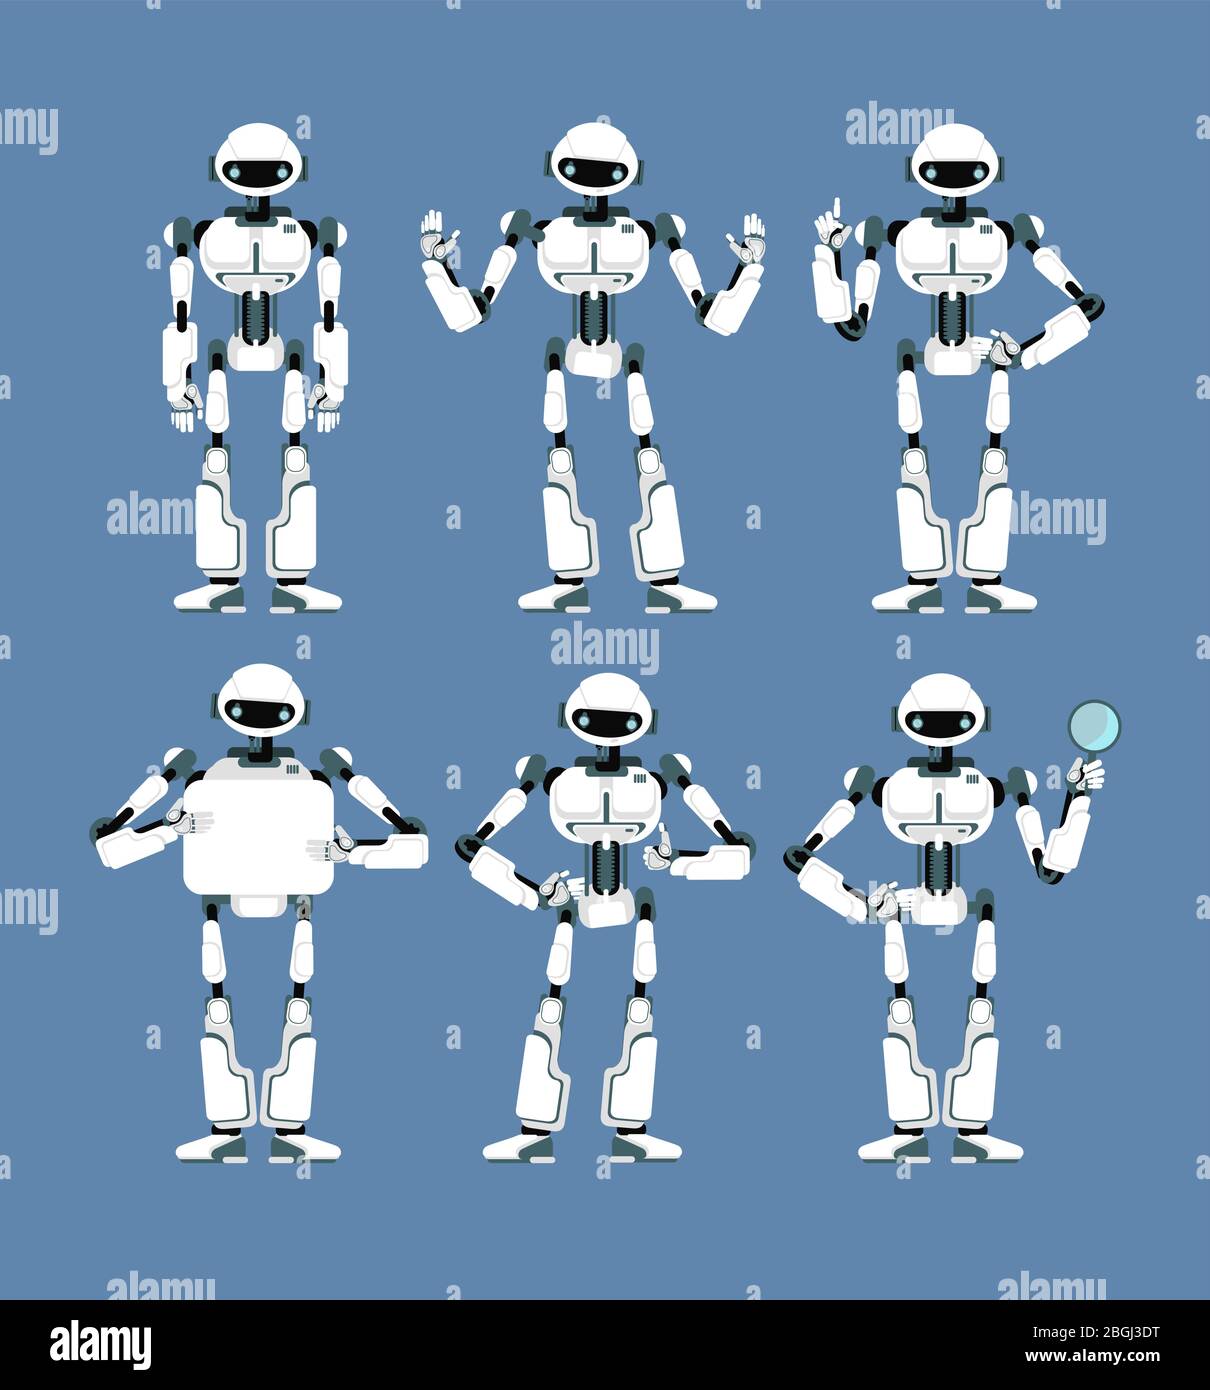 Robot androide cibernético con brazos y ojos biónicos en diferentes posturas. Lindo juego de mascotas de cifi humanoide de dibujos animados. Colección de robótica artificial futurista, ilustración vectorial Ilustración del Vector